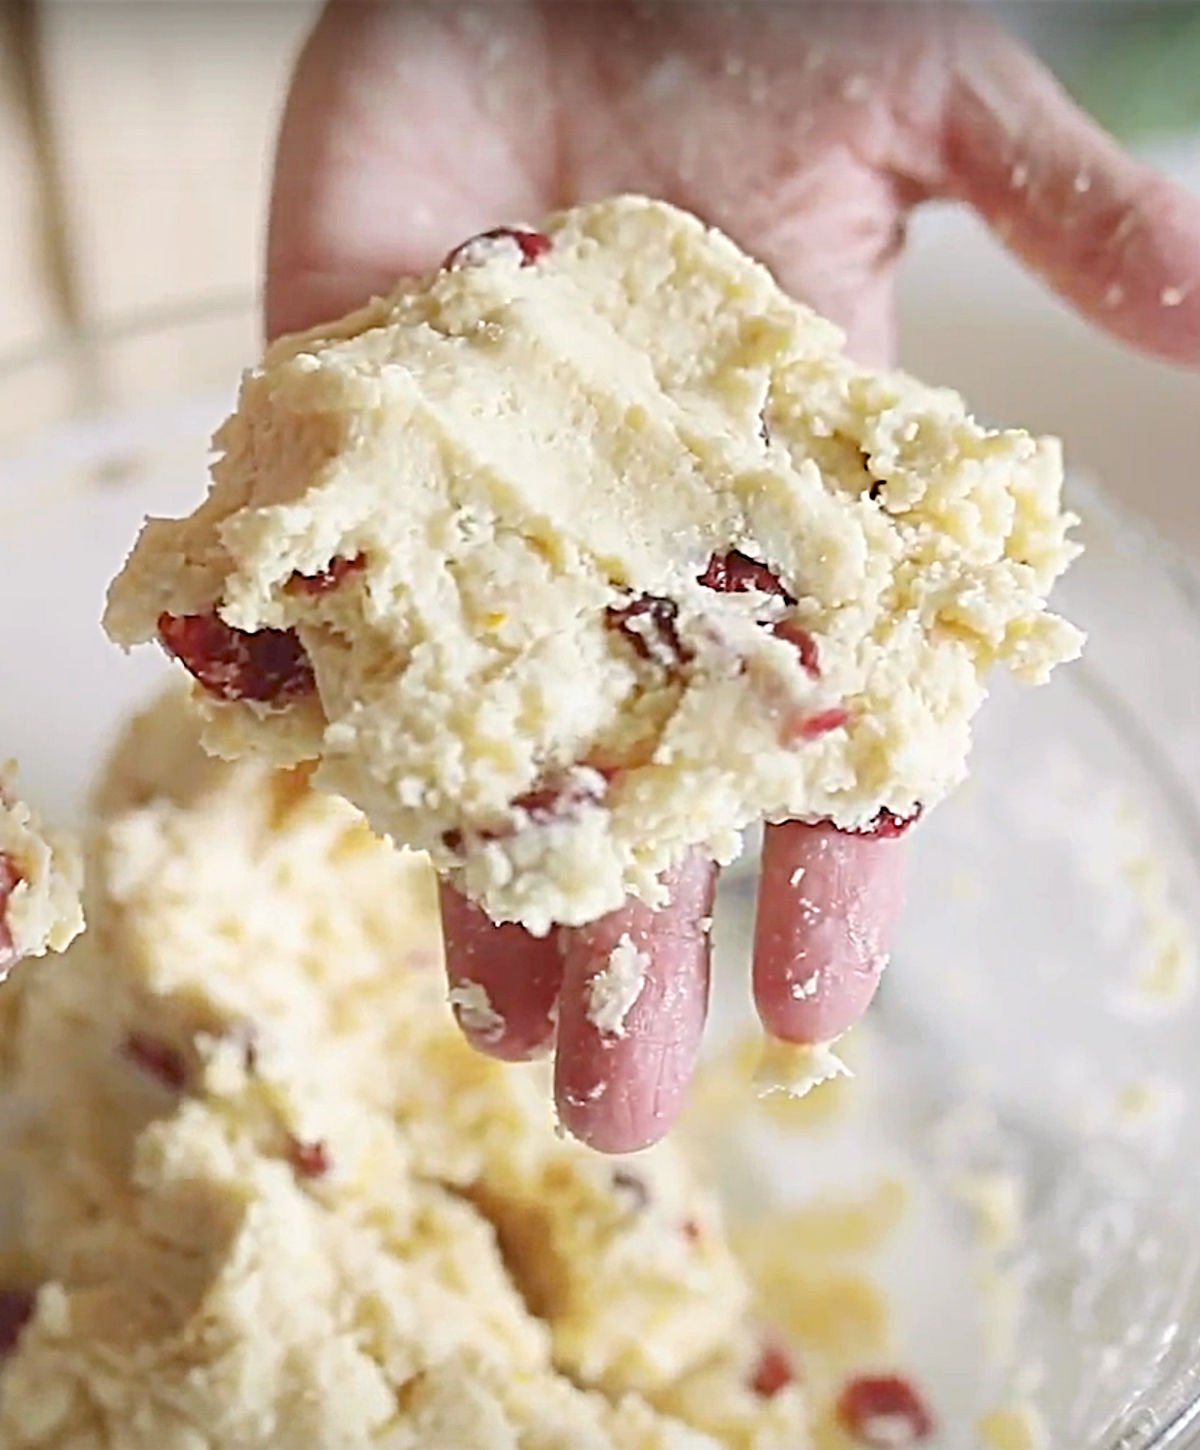 Hand holding piece of cranberry scone dough.